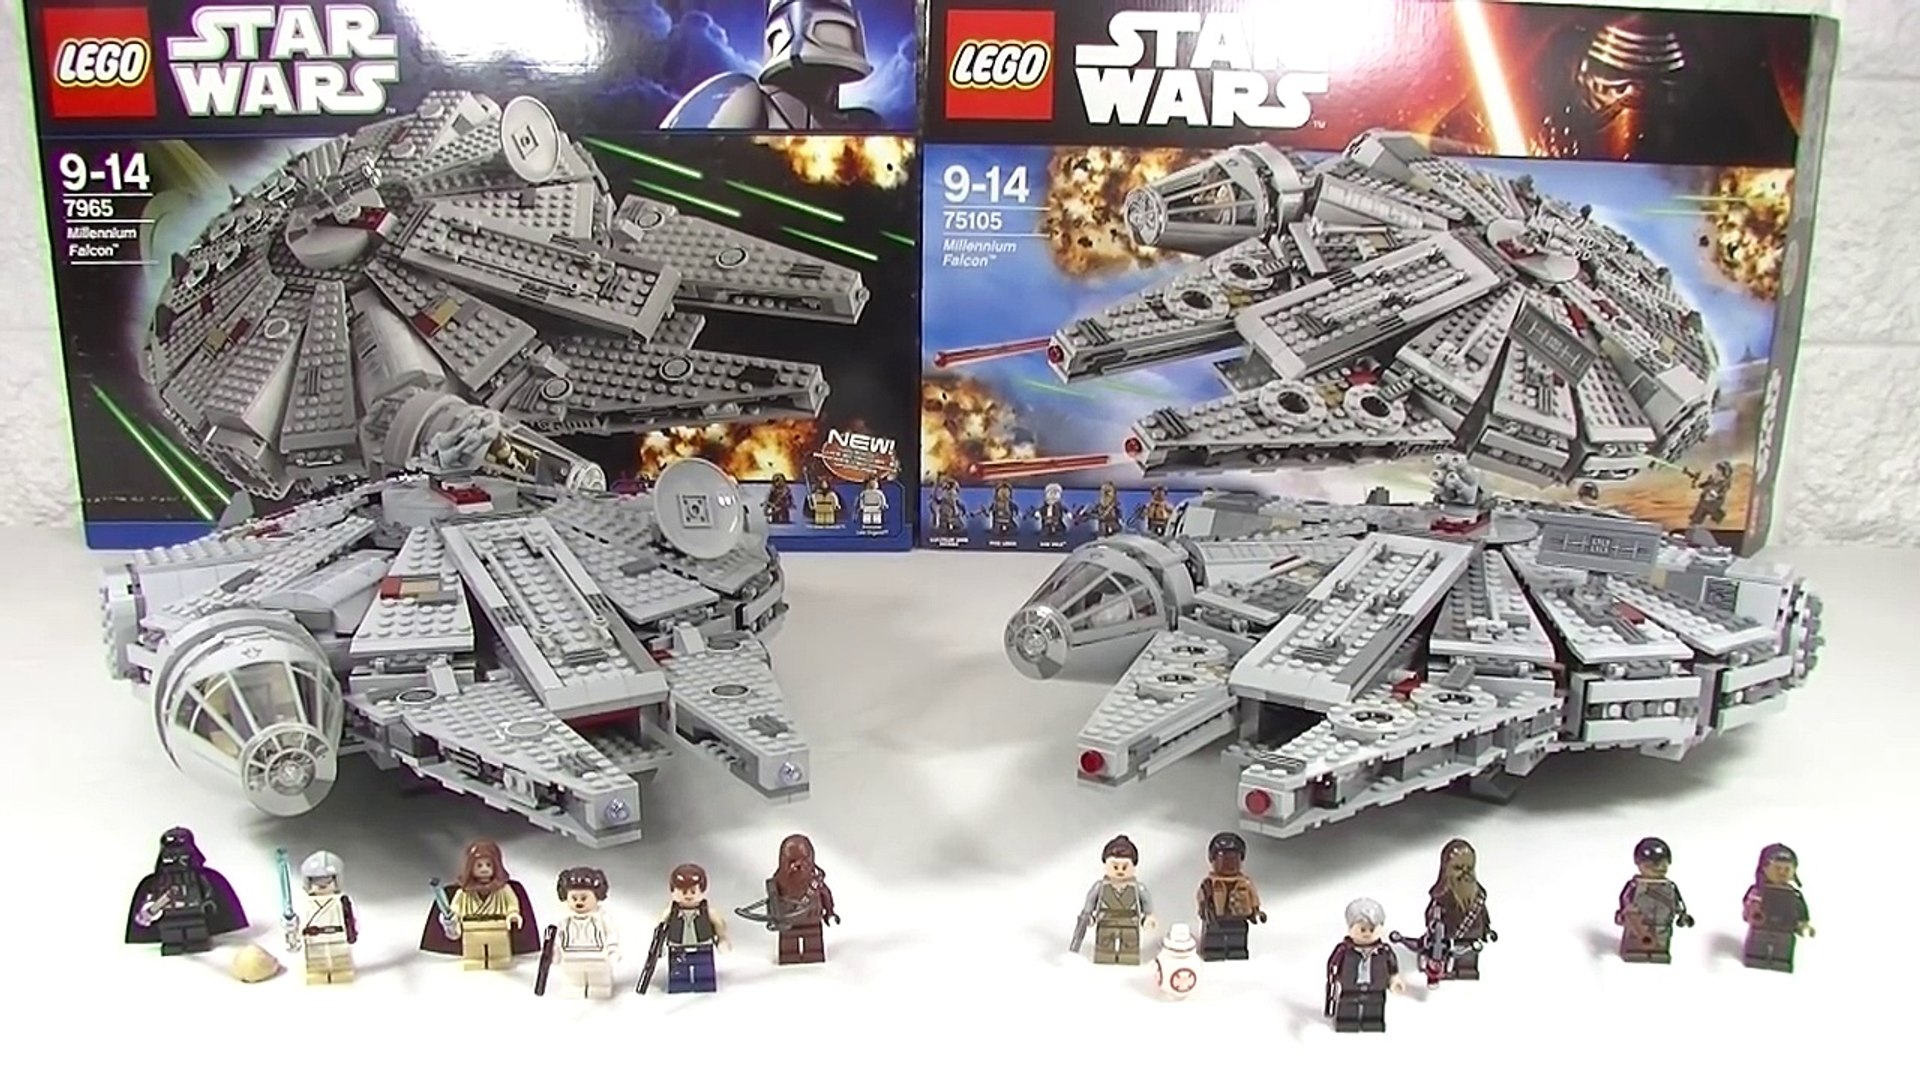 Lego Millennium Falcon 7965 vs 75105 Review and Comparison – Видео  Dailymotion